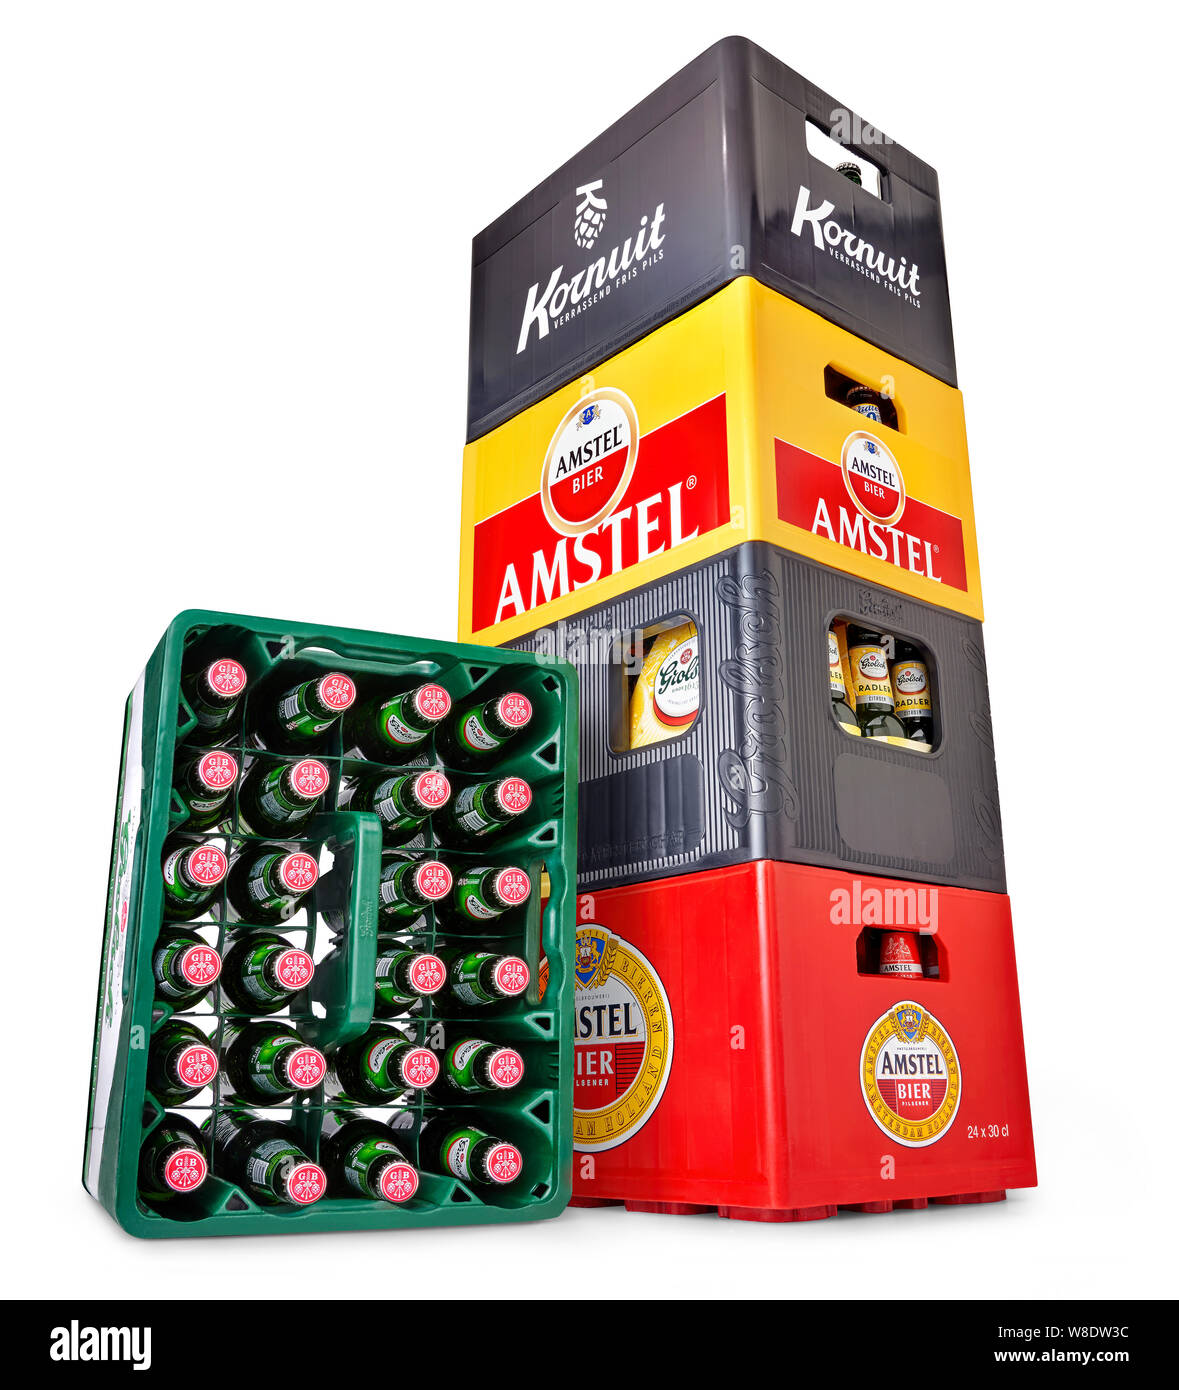 Paesi Bassi, Haarlem - 19-05-2019: kornuit amstel e birra Grolsch cassette in un monolocale. Pila di casse di birra isolato su bianco Foto Stock